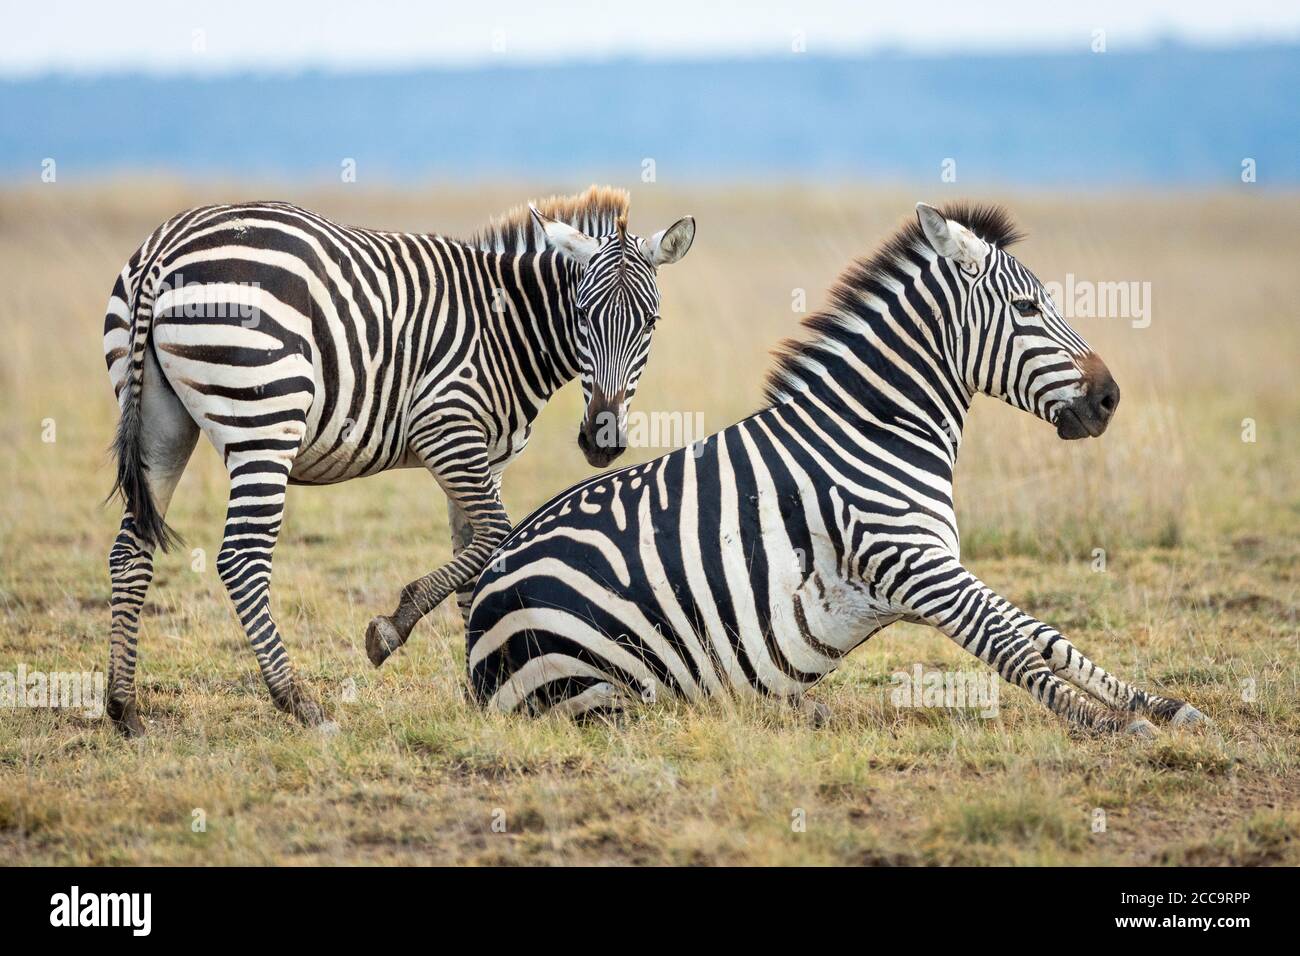 Two zebras in grassy plains of Amboseli looking alert in Amboseli National Reserve in Kenya Stock Photo